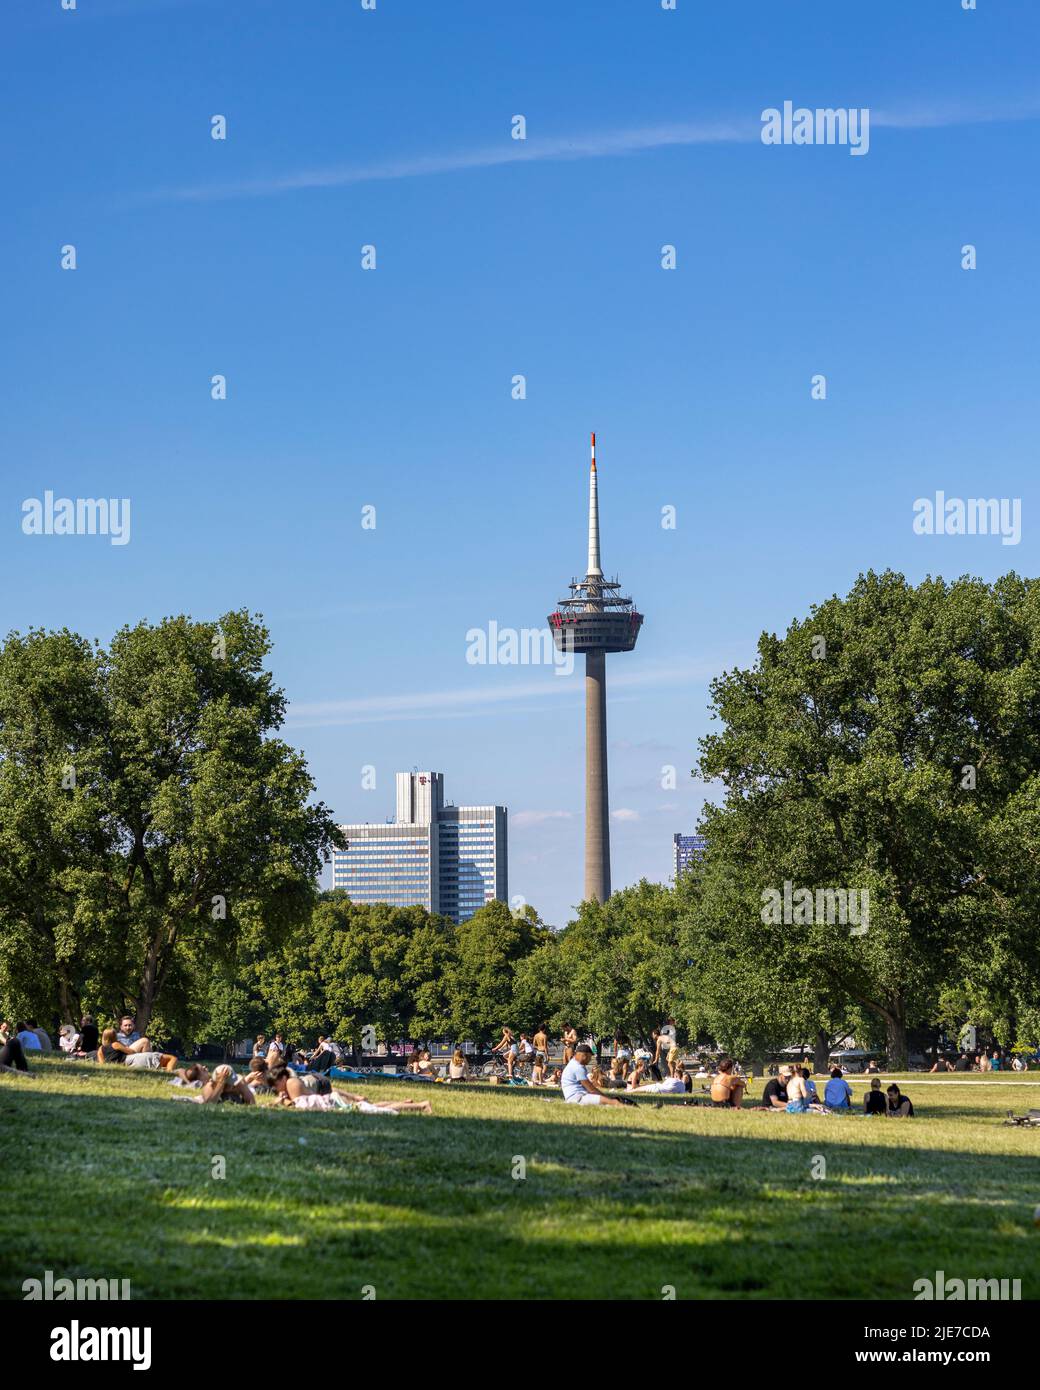 People enjoying warm summer weather in Hiroshima-Nagasaki-Park in Cologne Stock Photo